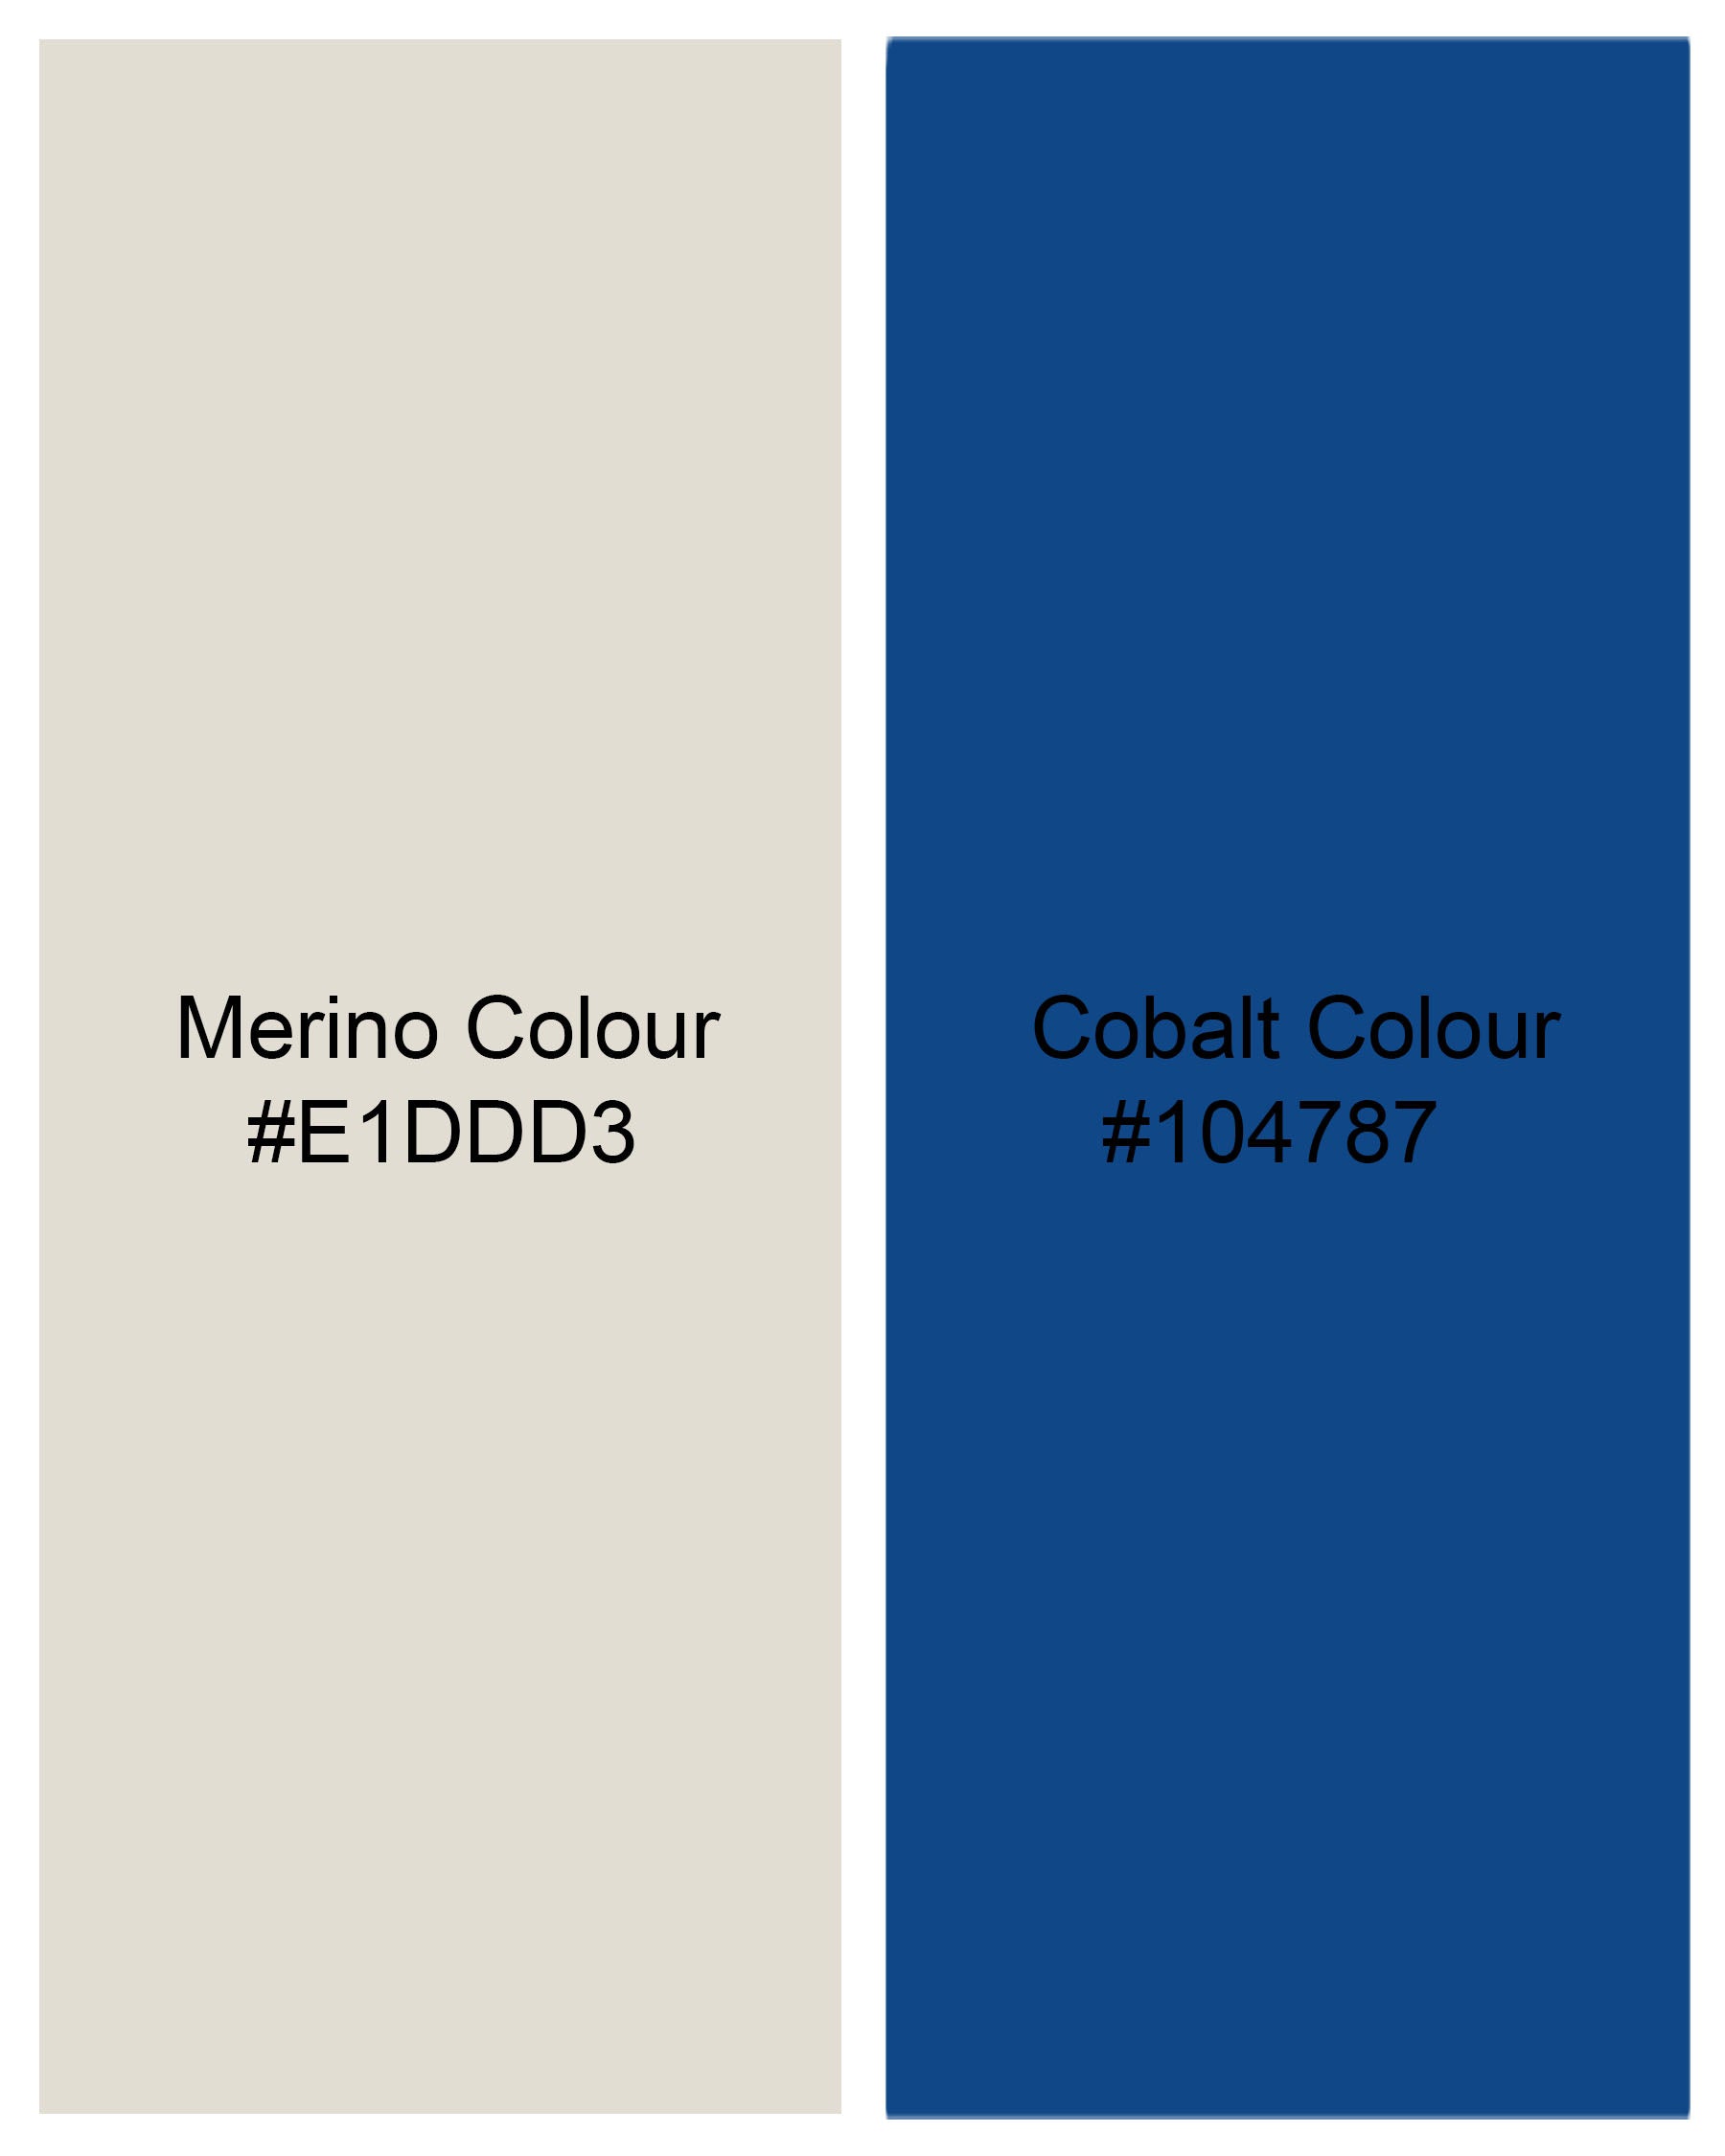 Merino Off White With Cobalt Blue Printed Chambray Premium Cotton Shirt 7886-CA-38, 7886-CA-H-38, 7886-CA-39, 7886-CA-H-39, 7886-CA-40, 7886-CA-H-40, 7886-CA-42, 7886-CA-H-42, 7886-CA-44, 7886-CA-H-44, 7886-CA-46, 7886-CA-H-46, 7886-CA-48, 7886-CA-H-48, 7886-CA-50, 7886-CA-H-50, 7886-CA-52, 7886-CA-H-52